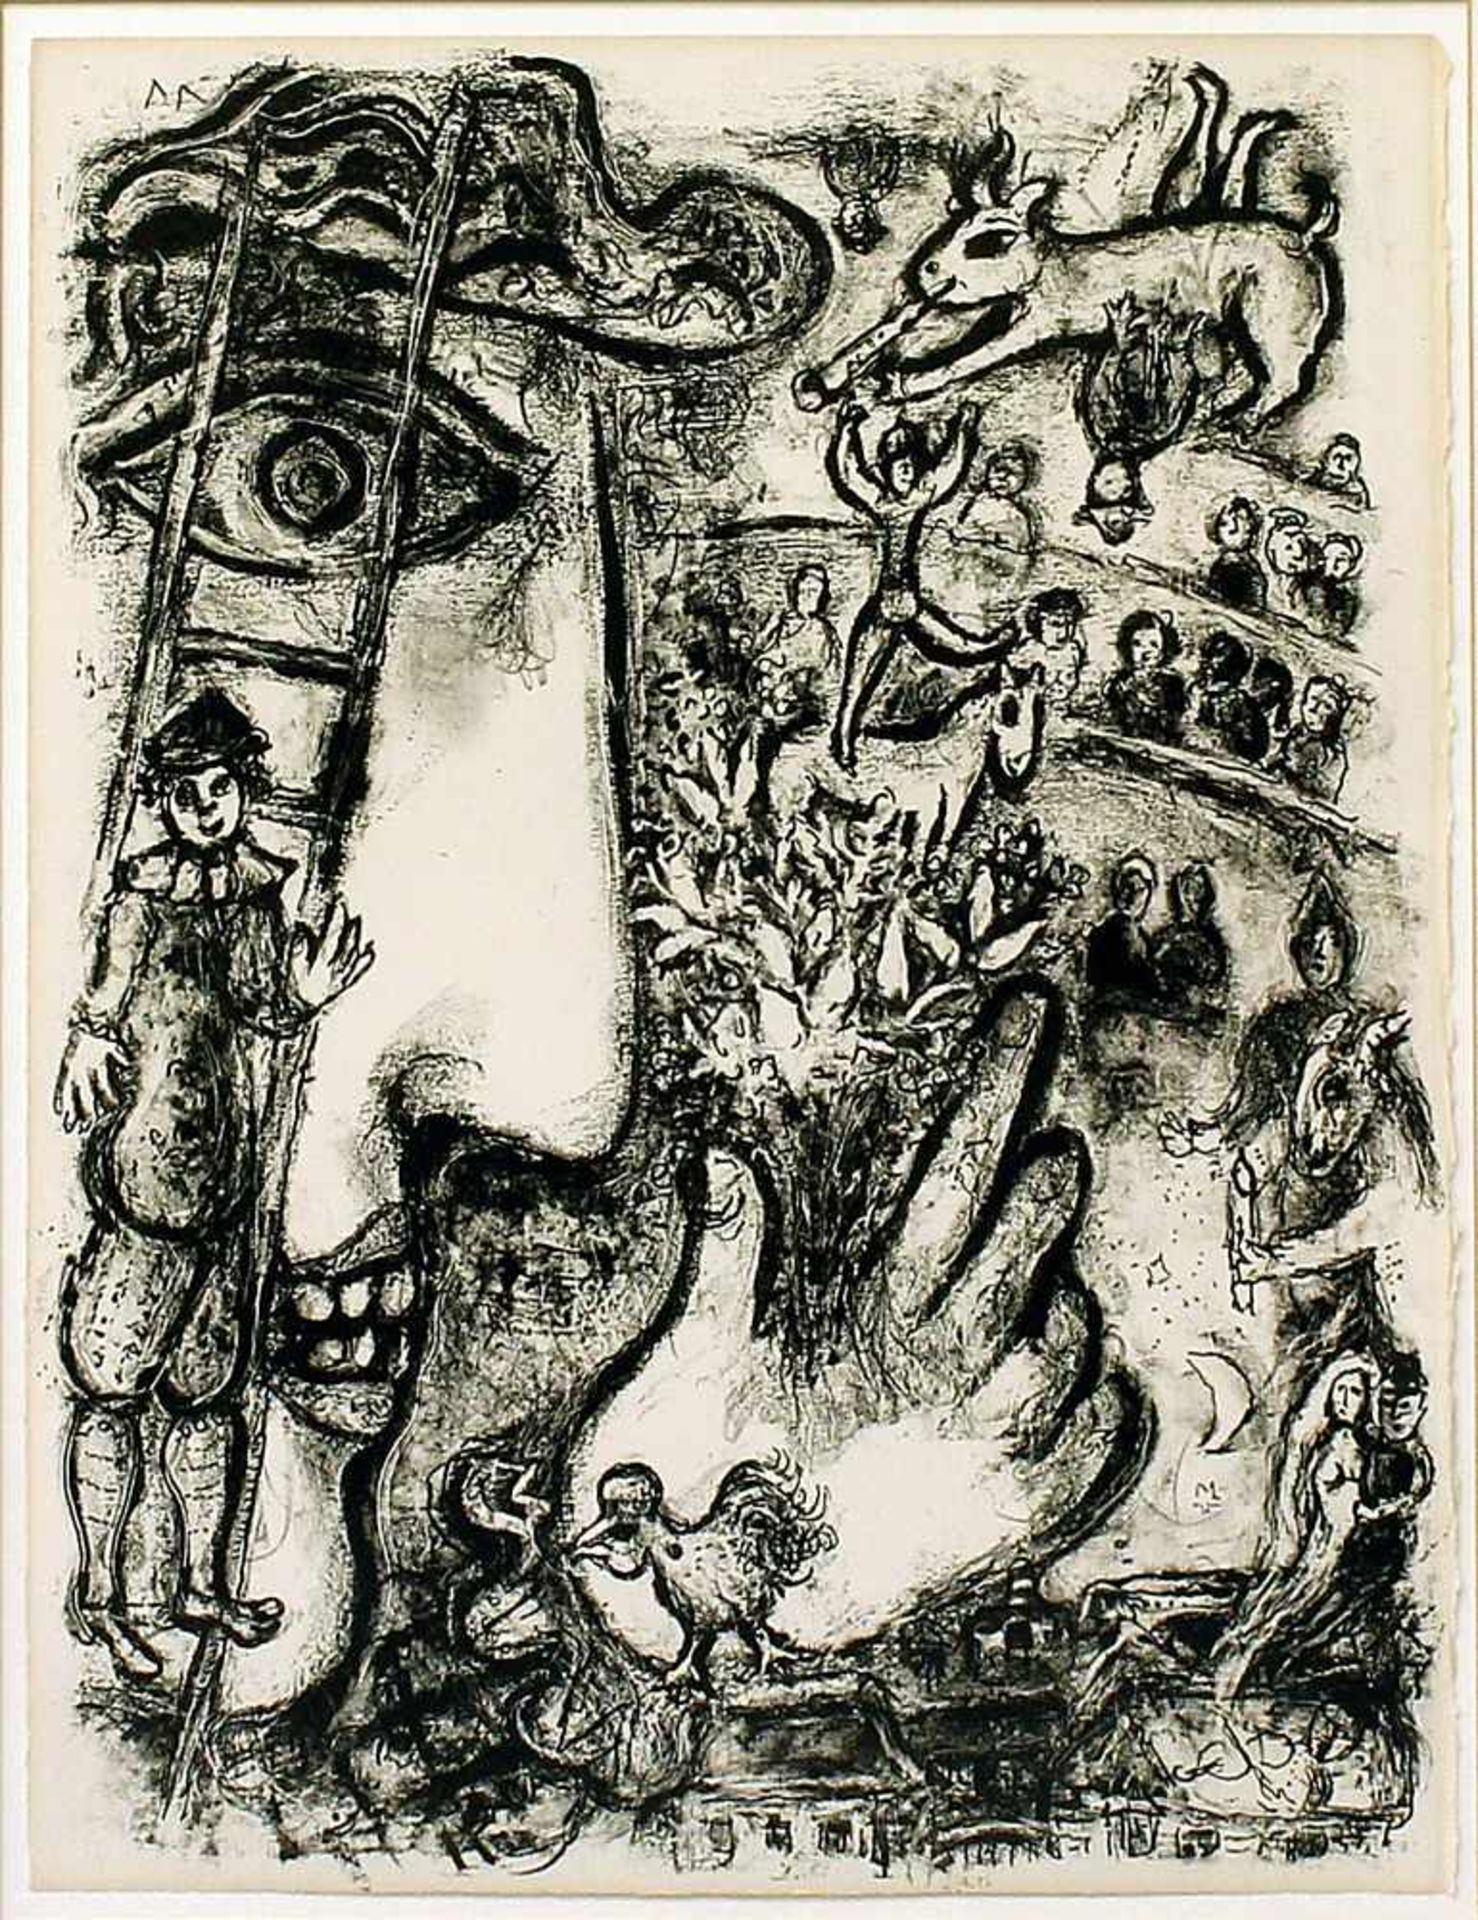 Chagall, Marc (1887 Witebsk - Paul de Vence 1985)Blatt aus "Cirque" (Zirkus), von 1967.